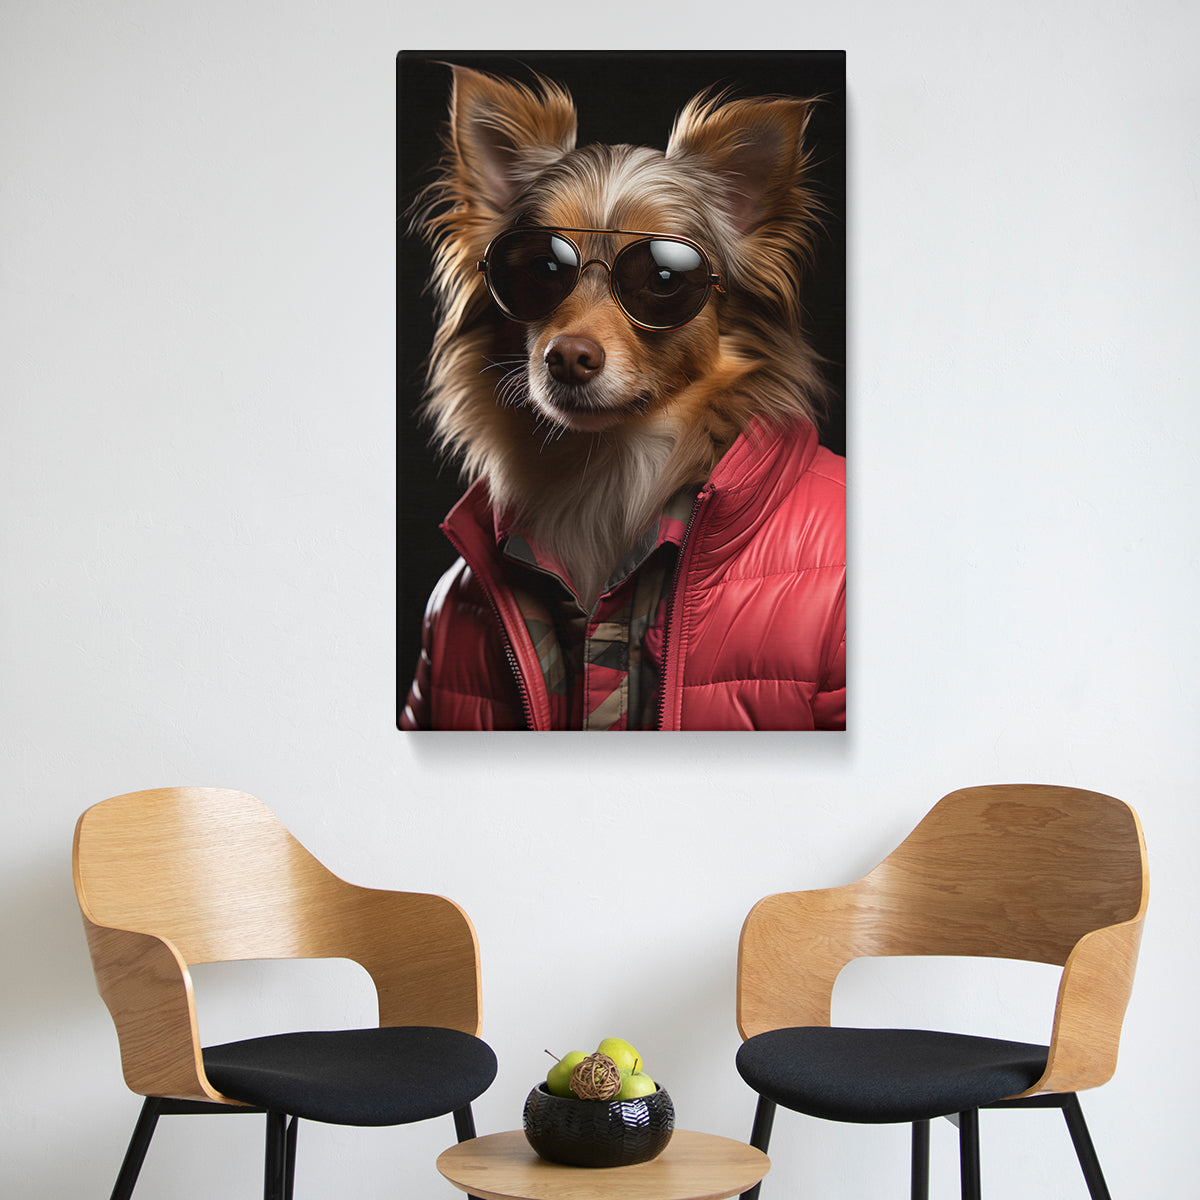 Stylish Dog in Sunglasses and Jacket Canvas Prints Artesty 1 Panel 16"x24" 